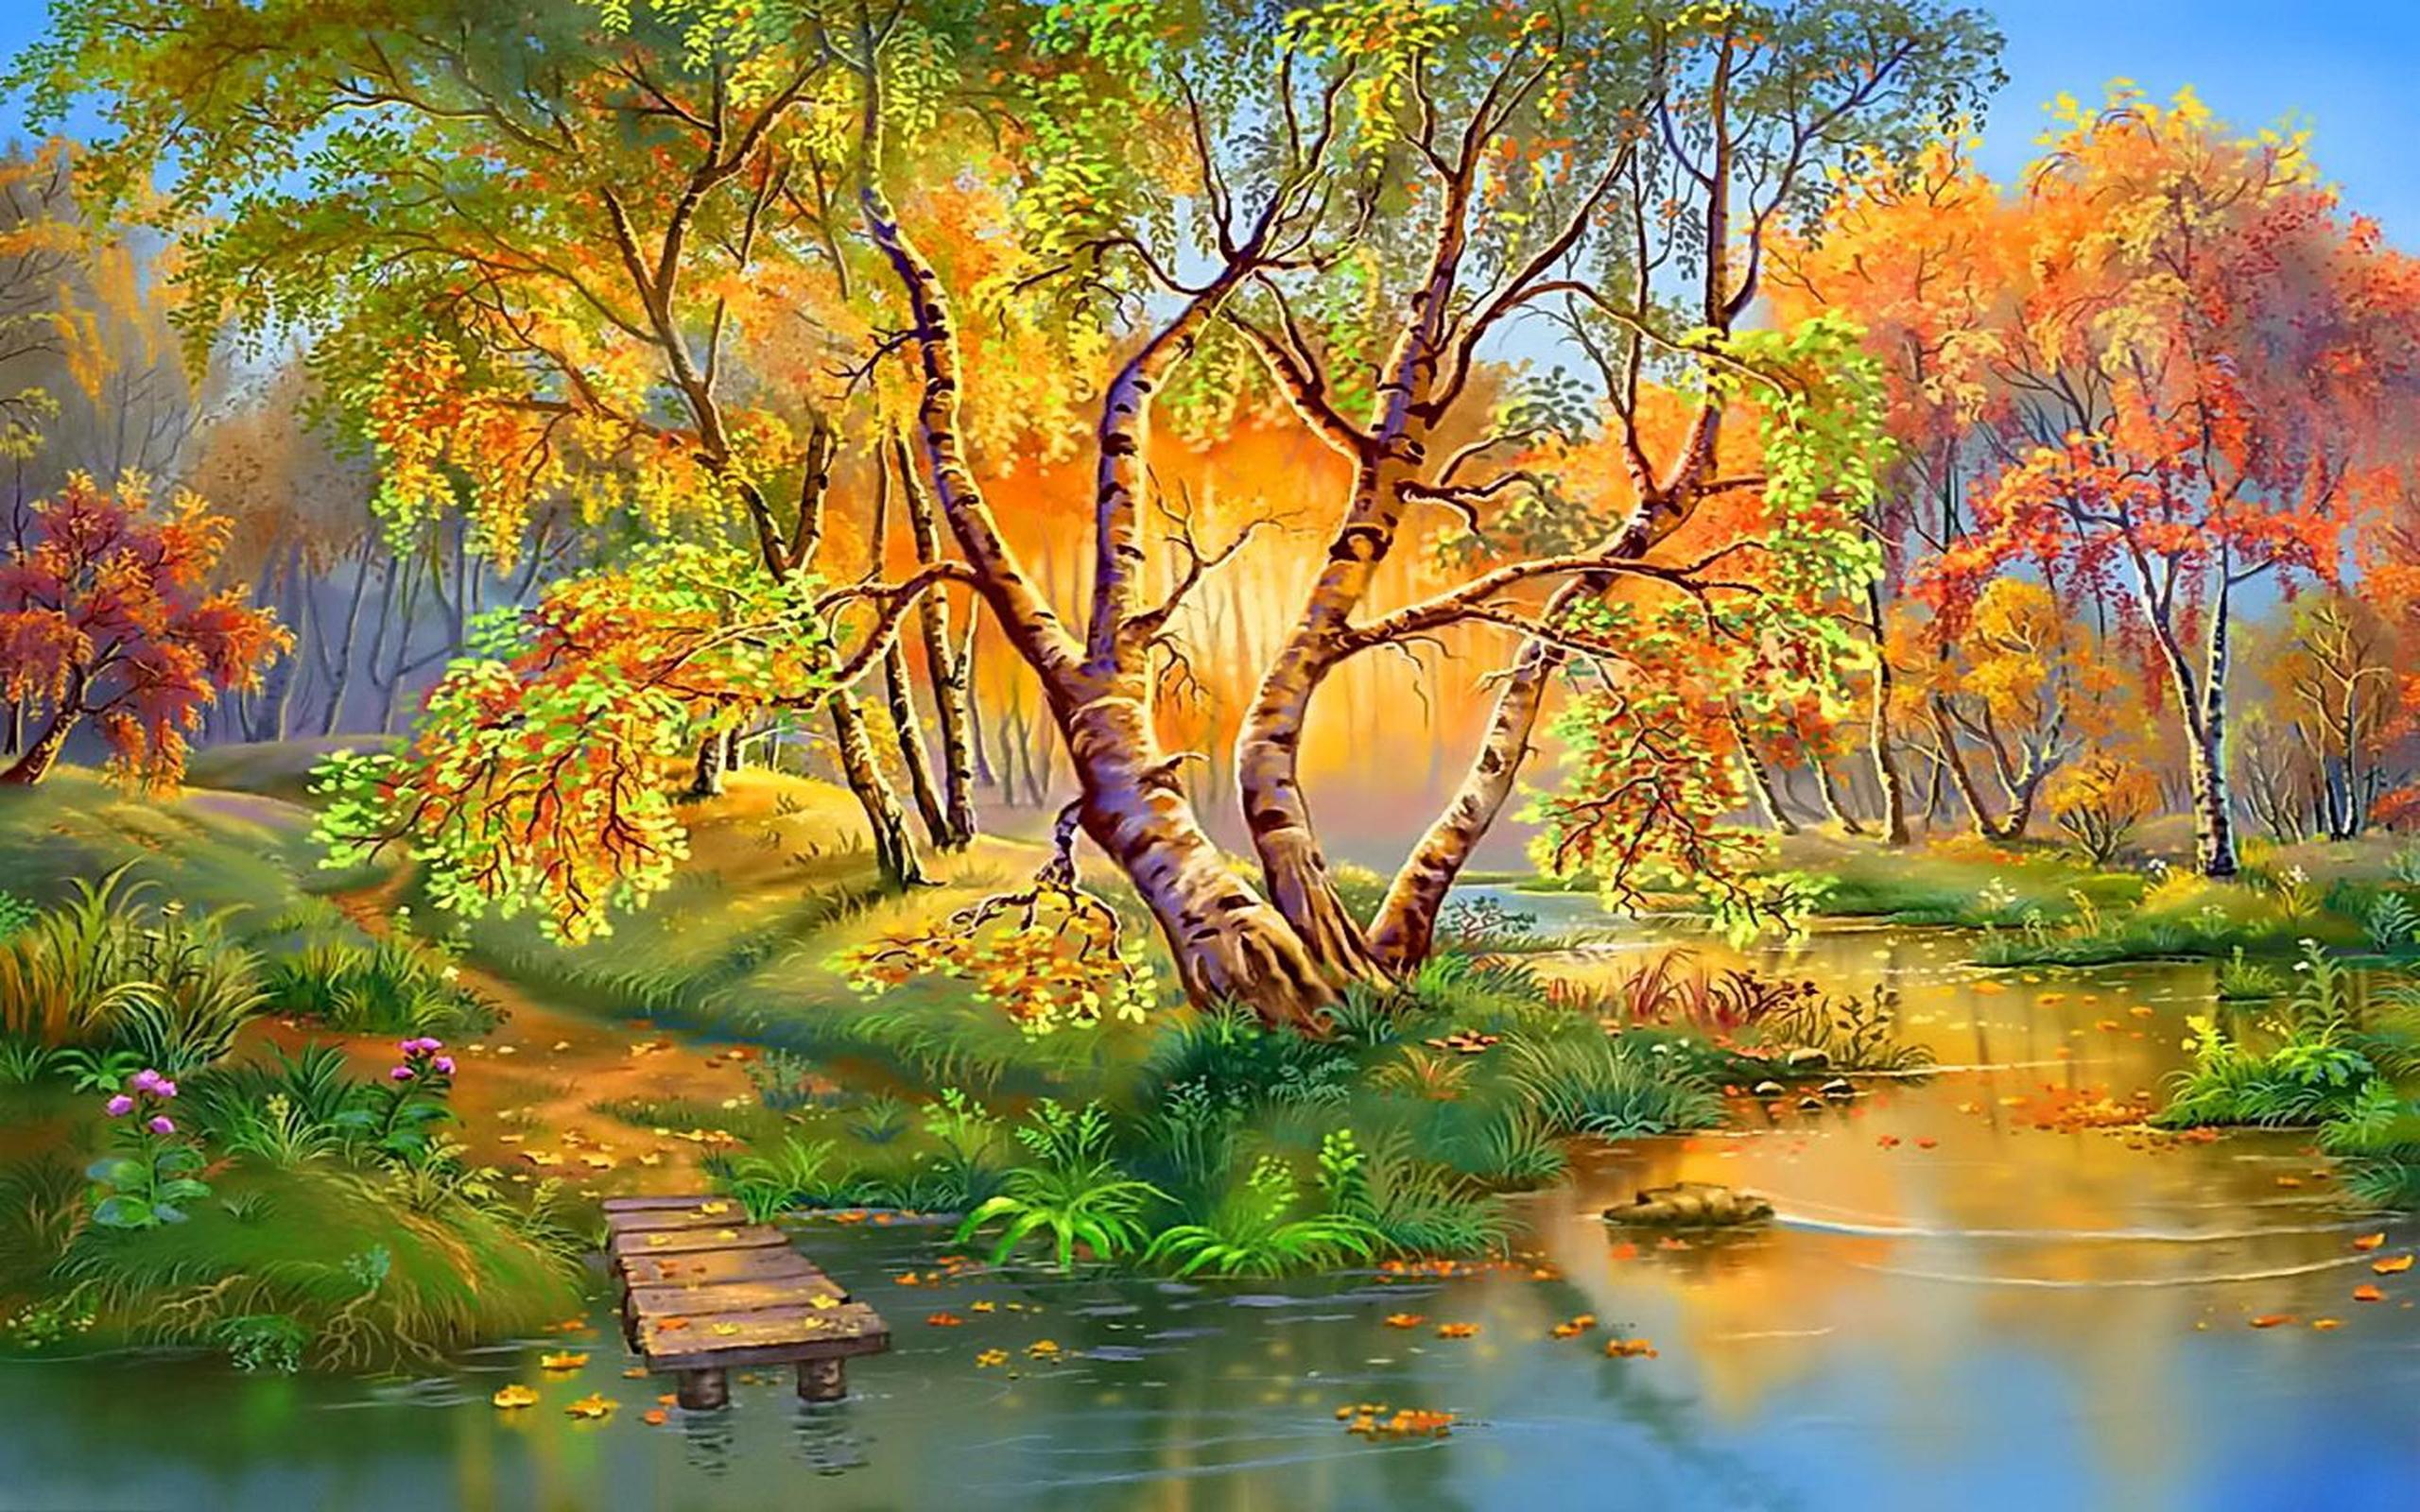 Autumn Beautiful Landscape, Nature, Birch Trees, River, Sun